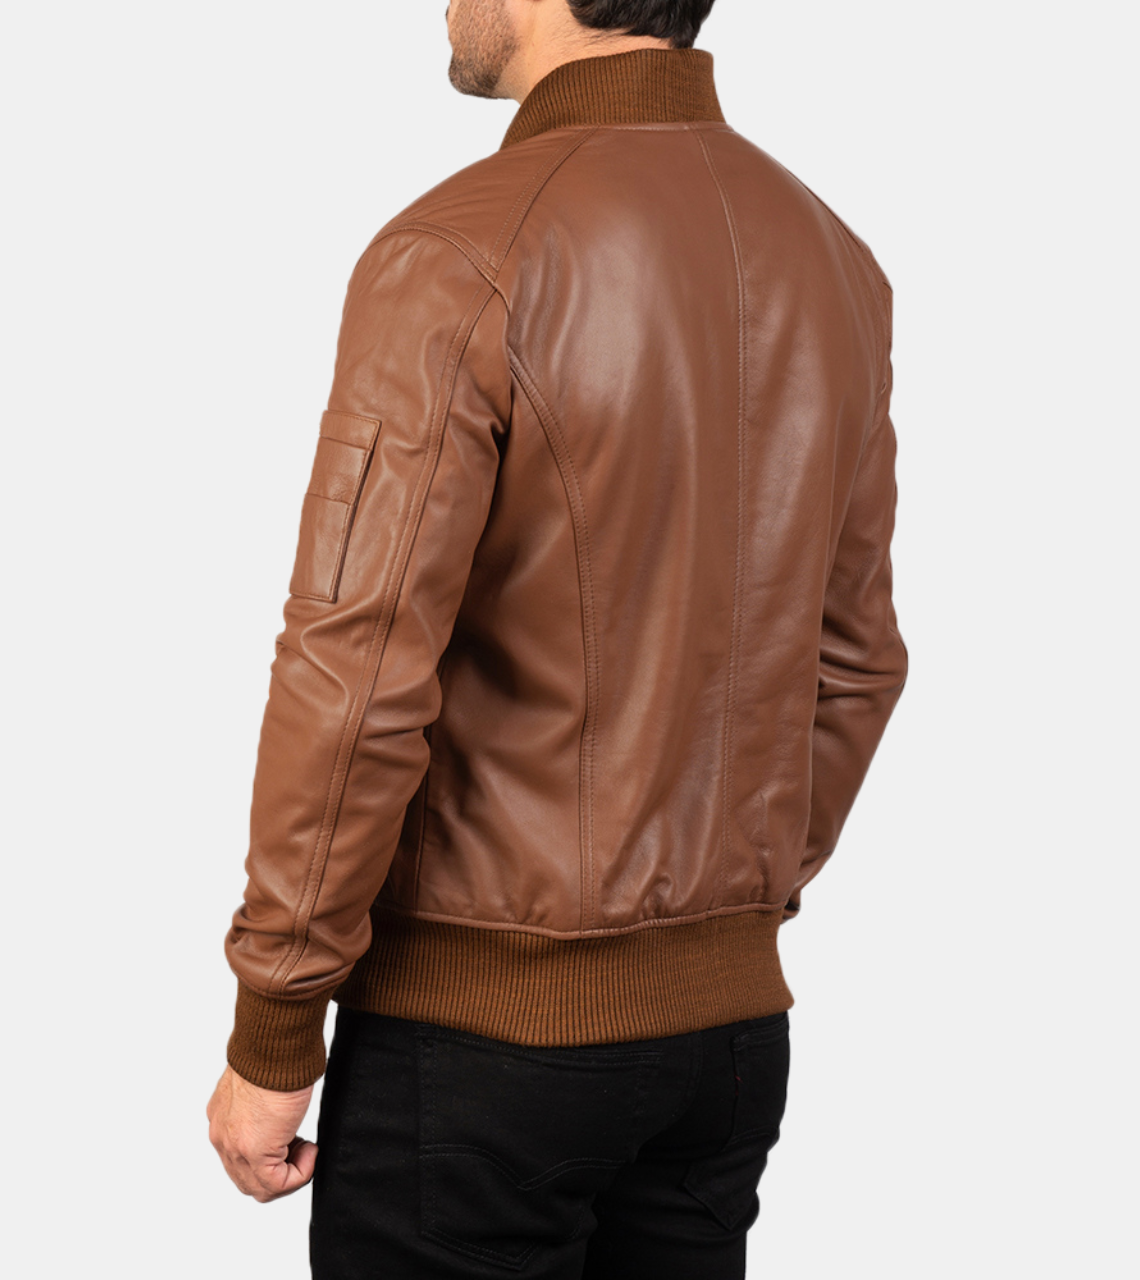  Wolston Men's Brown Bomber Leather Jacket  Back